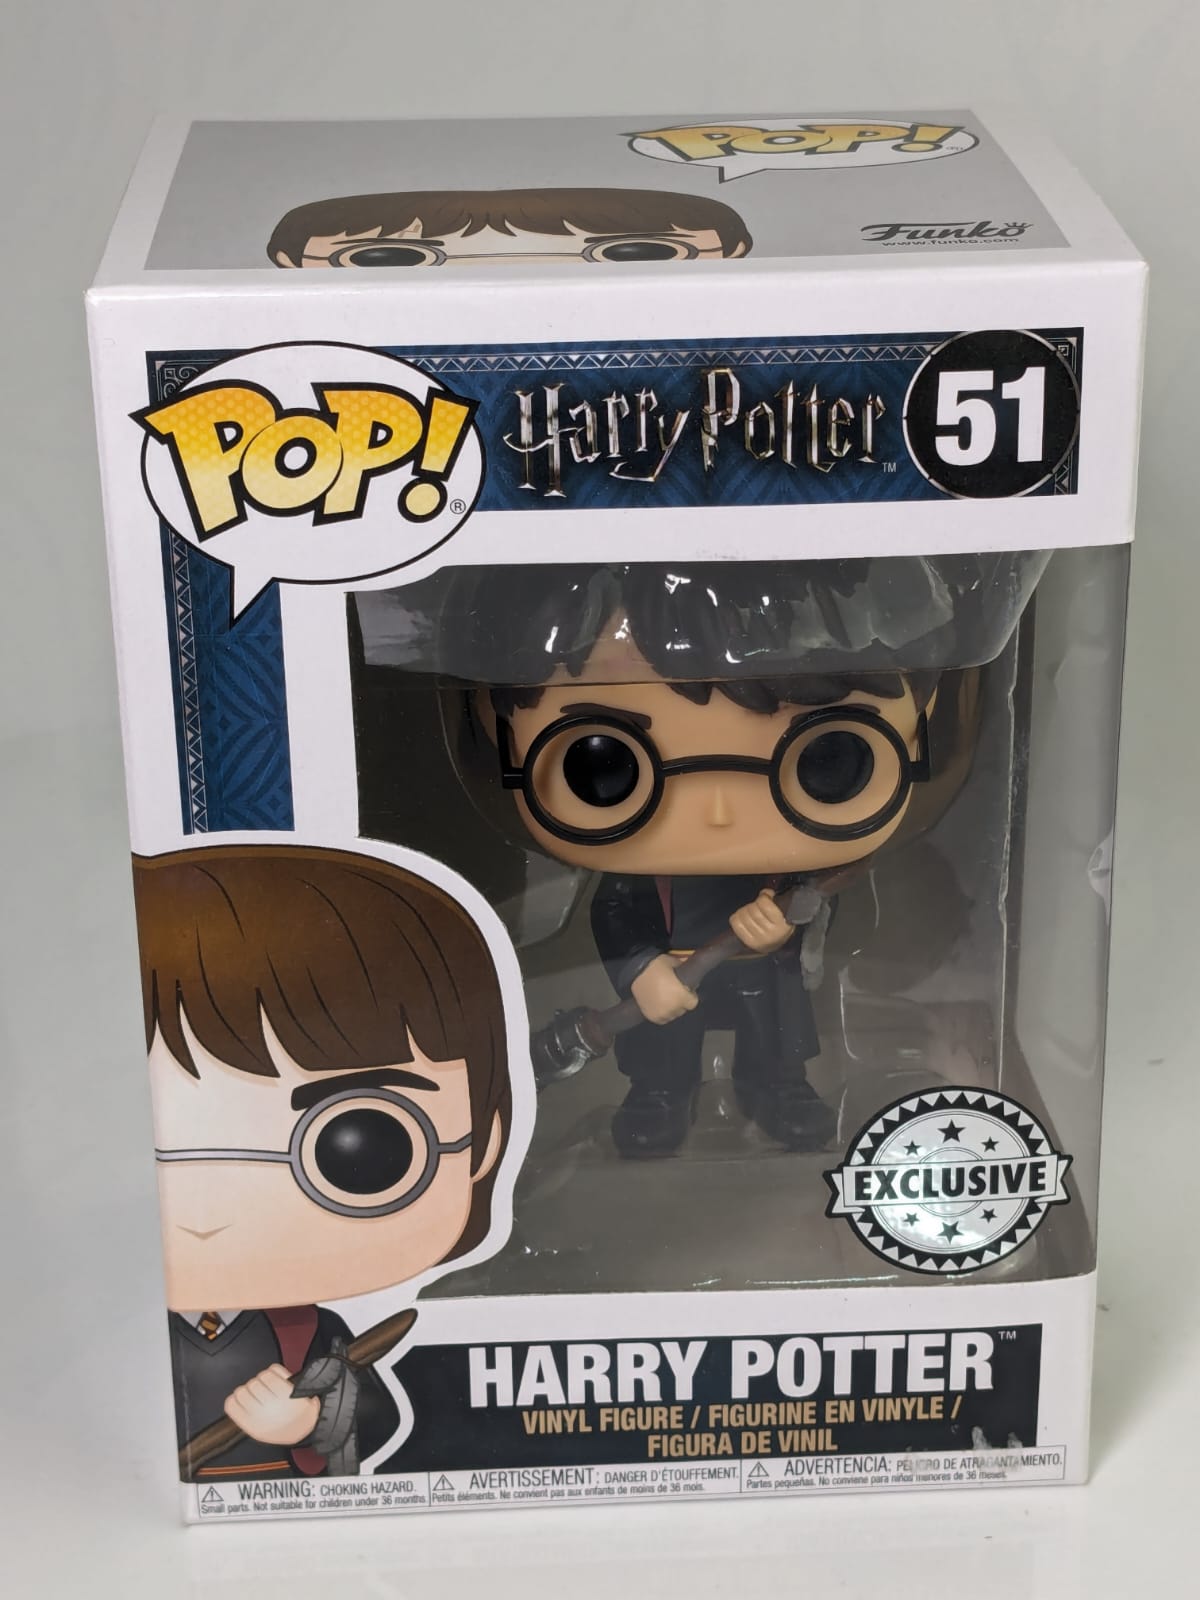 Harry Potter 51 Pop!